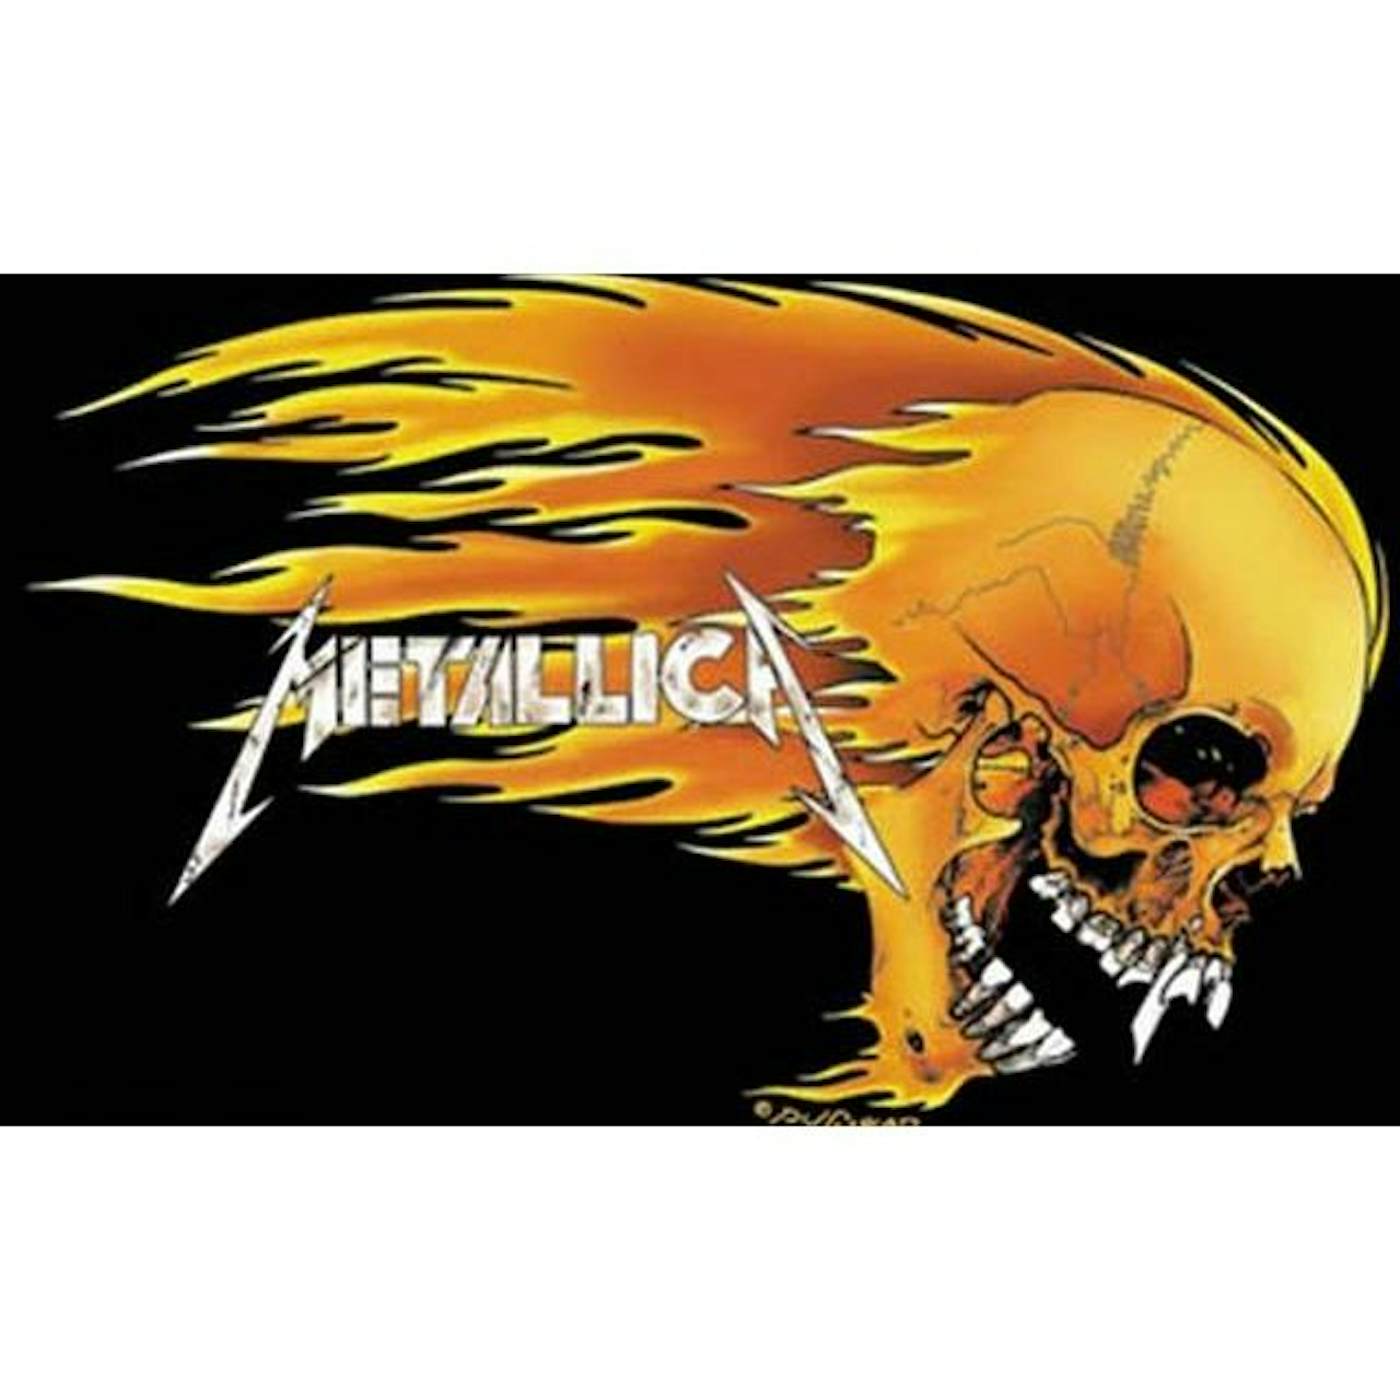 Metallica Skull & Flames Fabric Poster